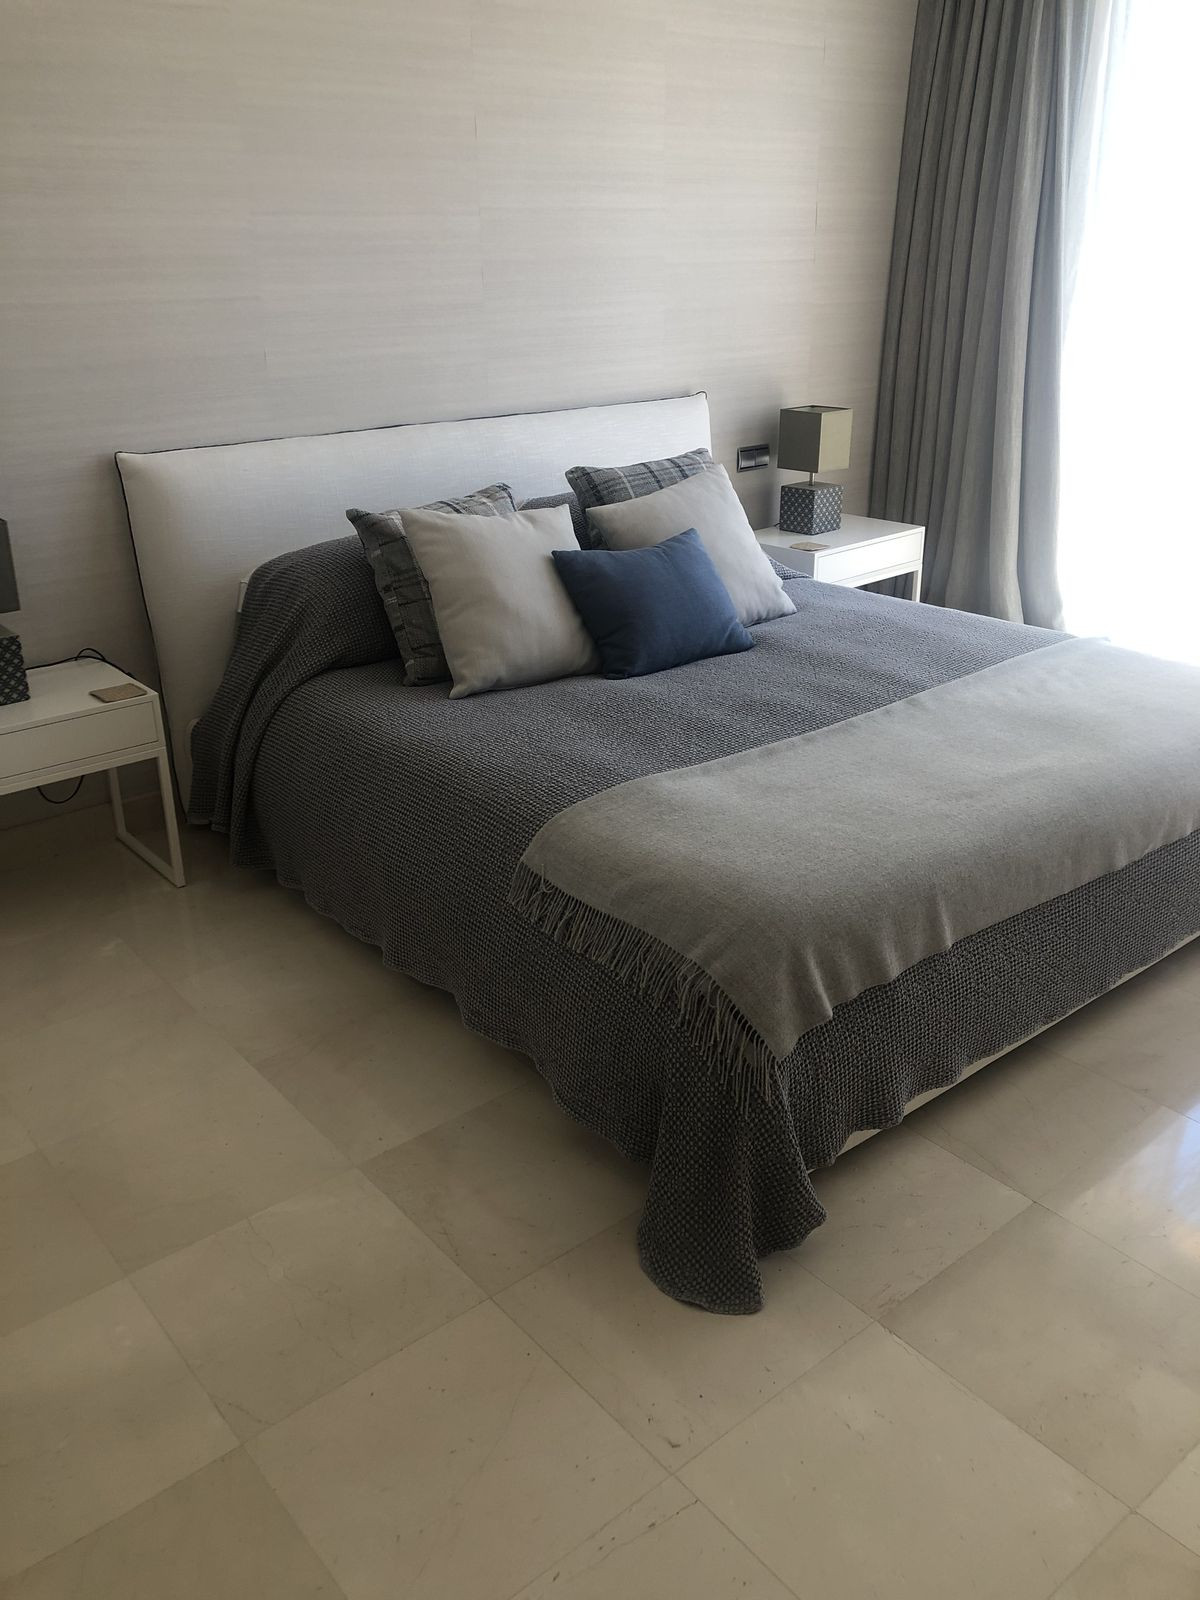 2 bedroom Apartment For Sale in Marbella, Málaga - thumb 15